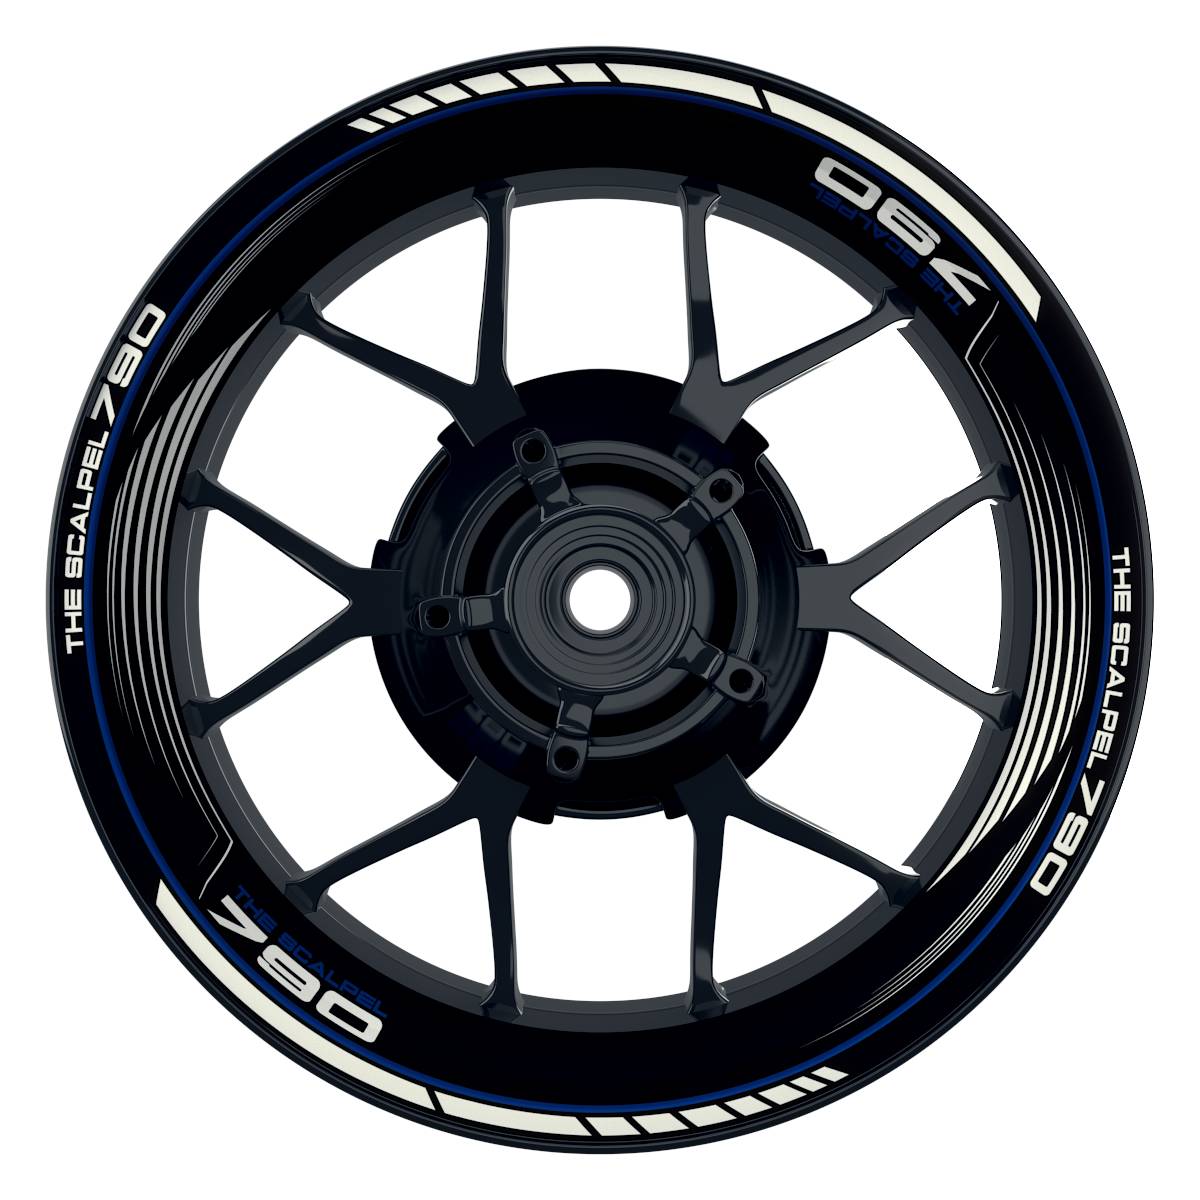 THE SCALPEL 790 SAW schwarz blau Wheelsticker Felgenaufkleber